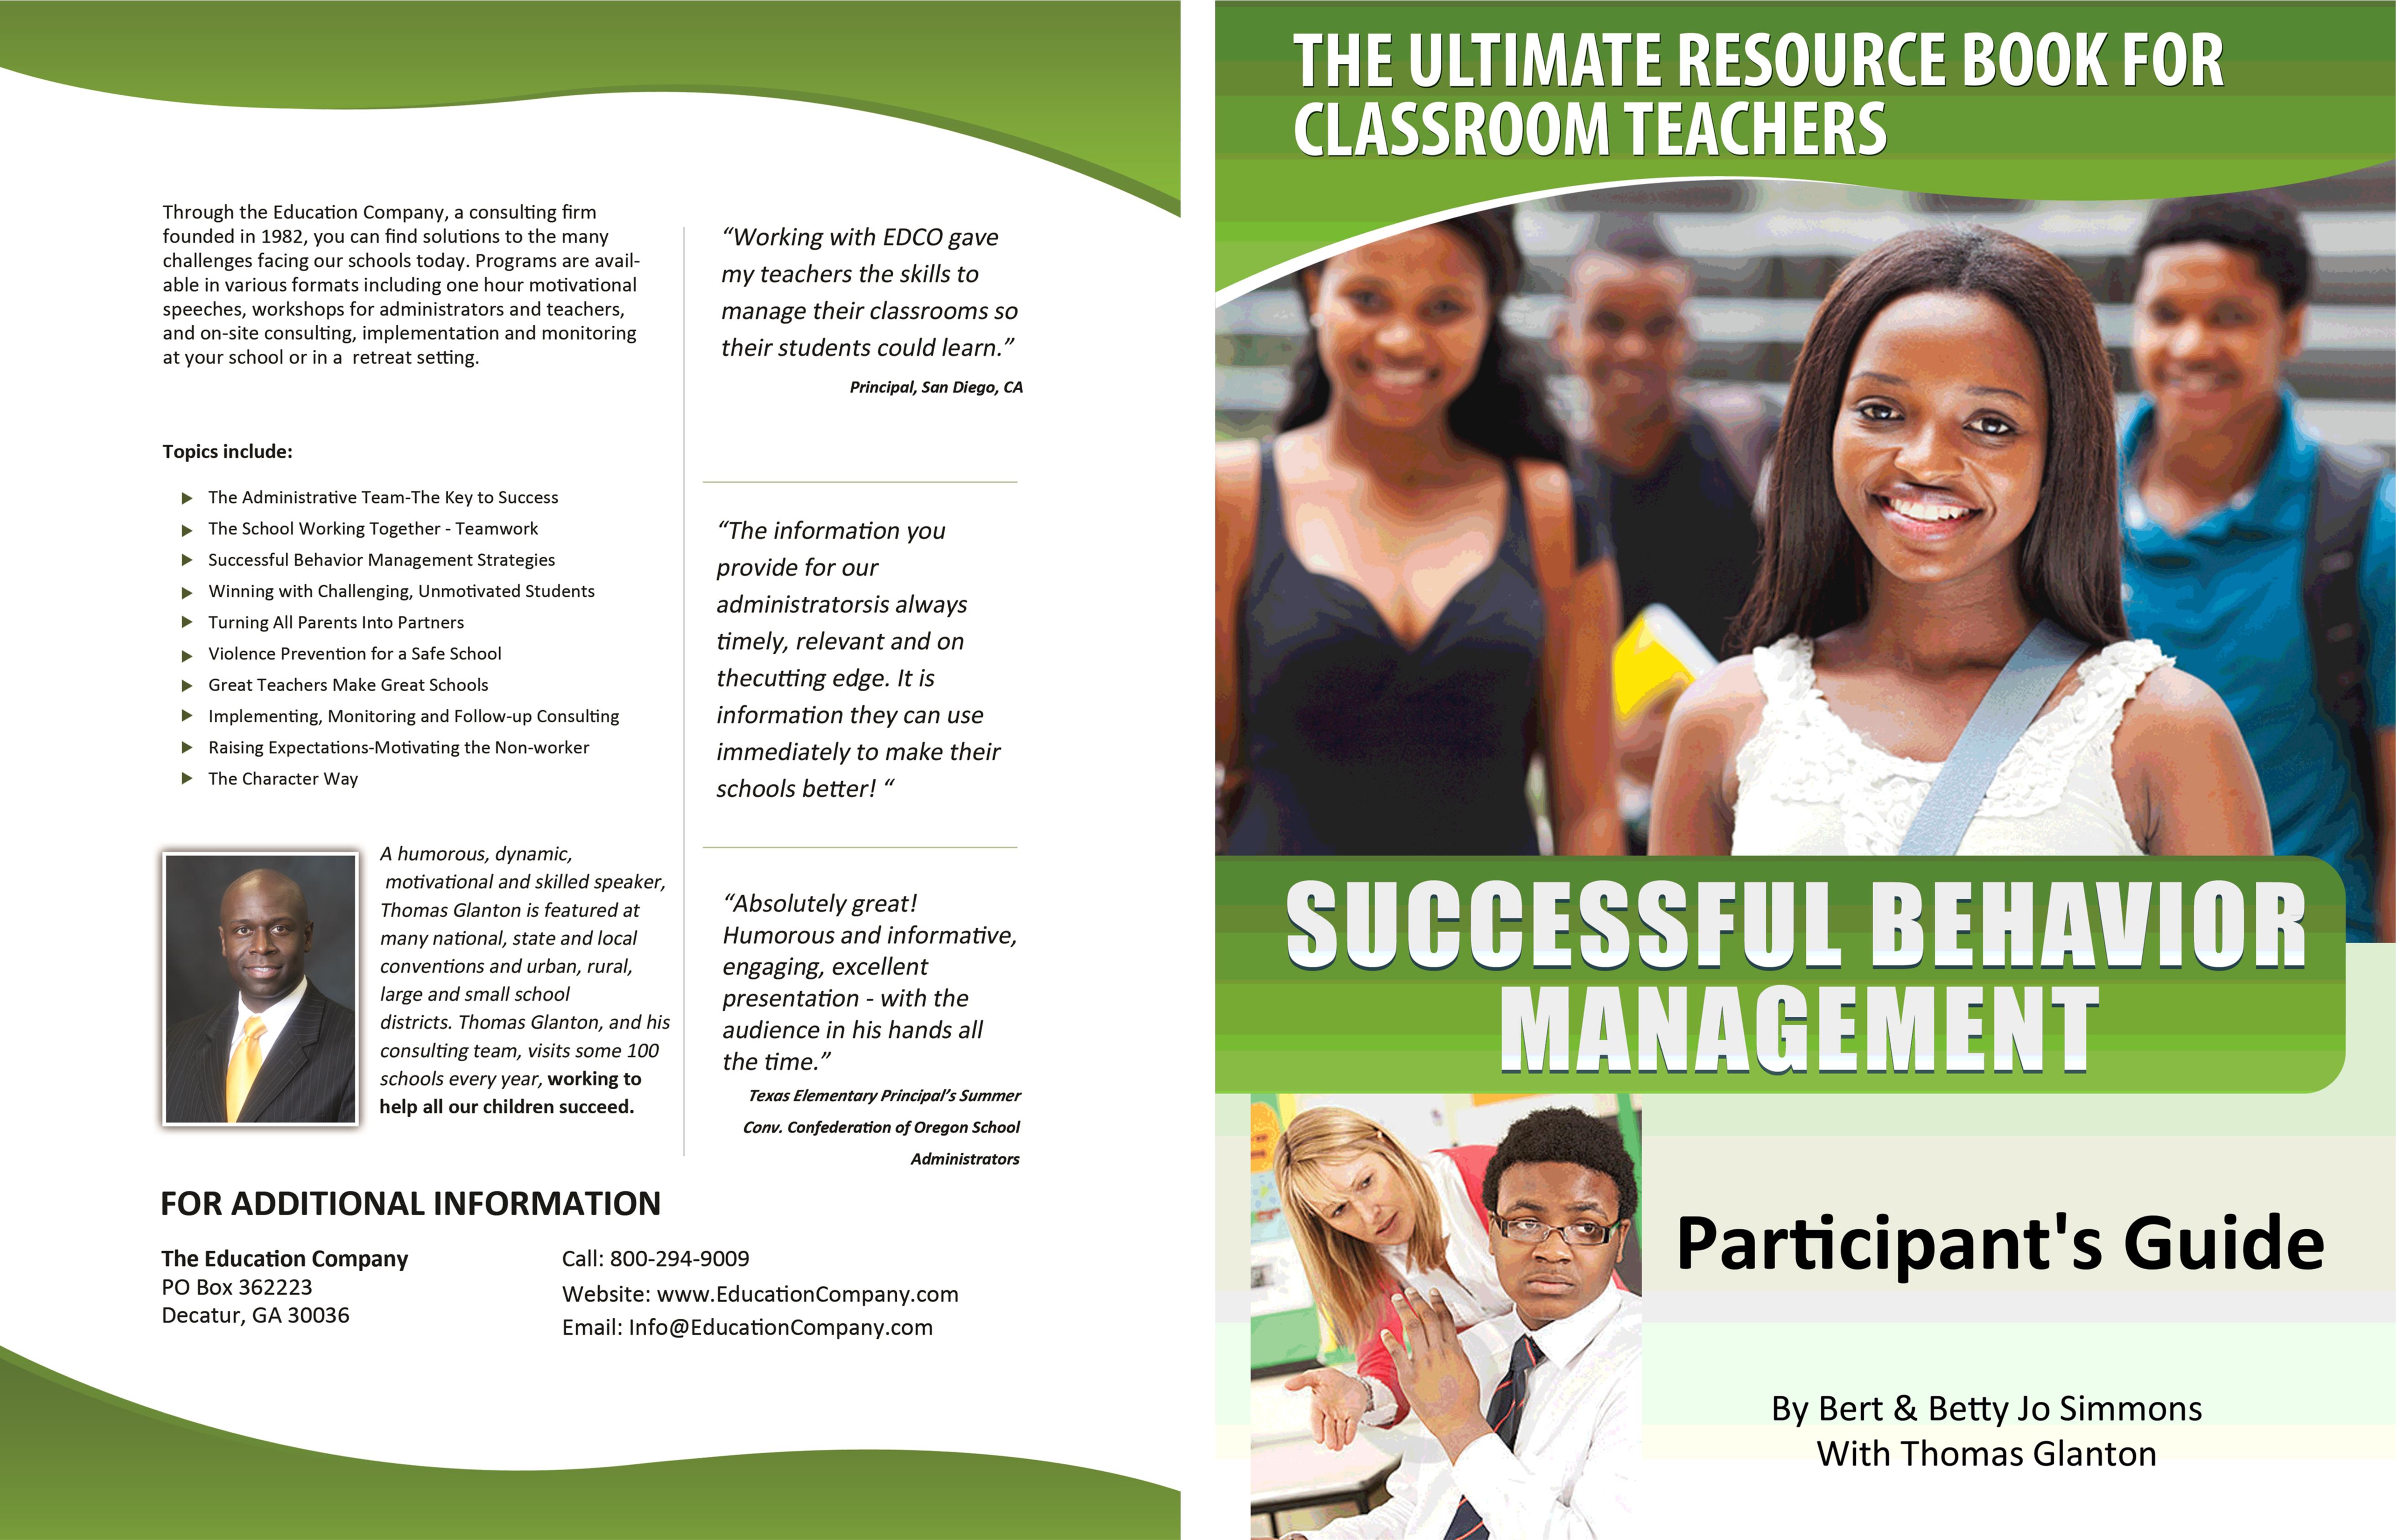 Successful Behavior Management Participant Guide cover image